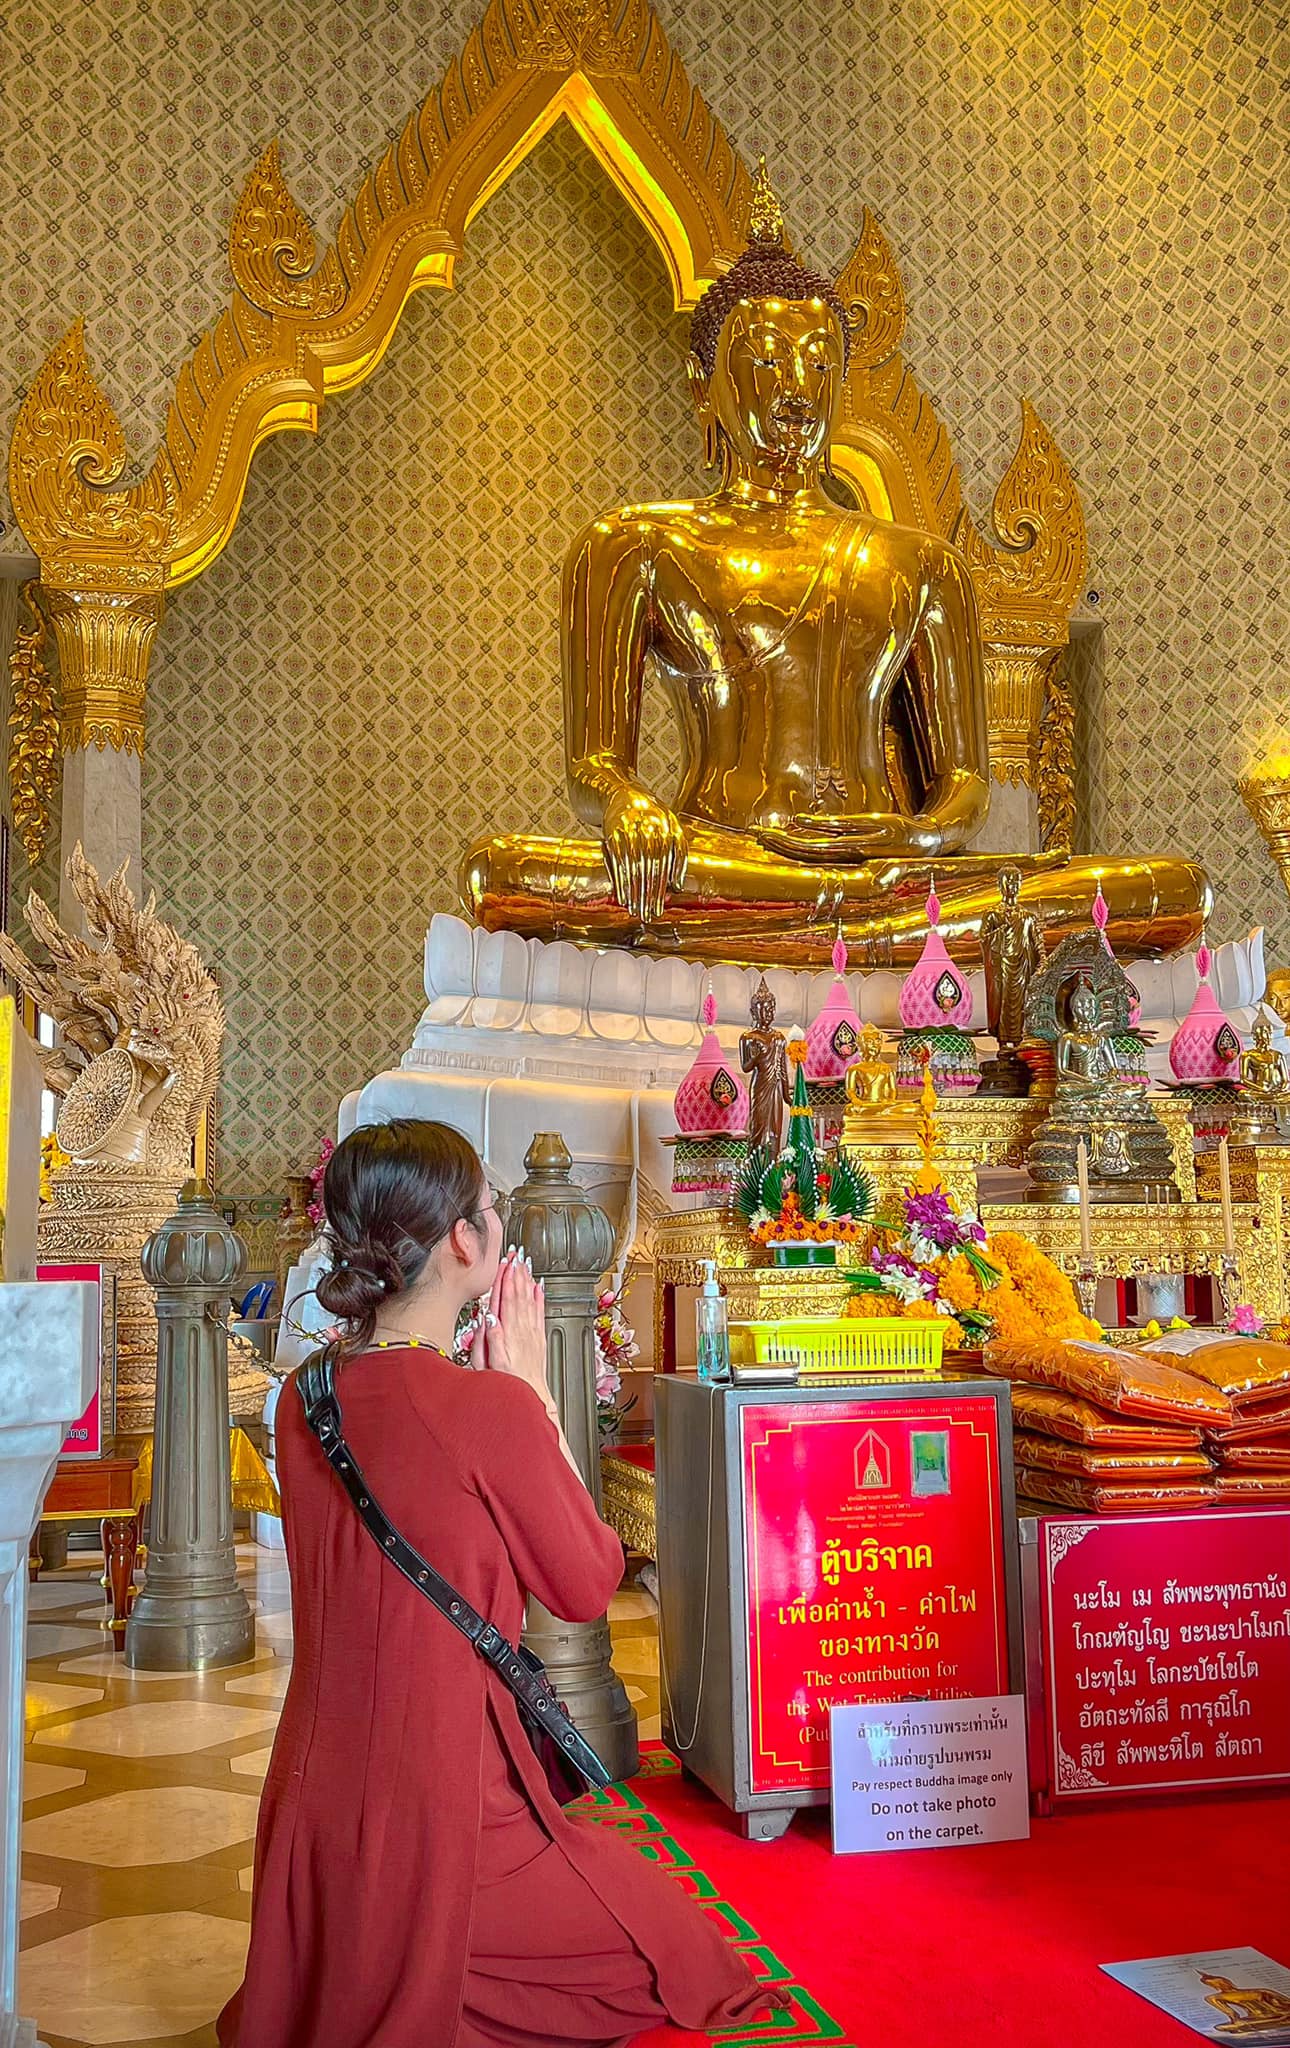 du lịch Bangkok trọn gói